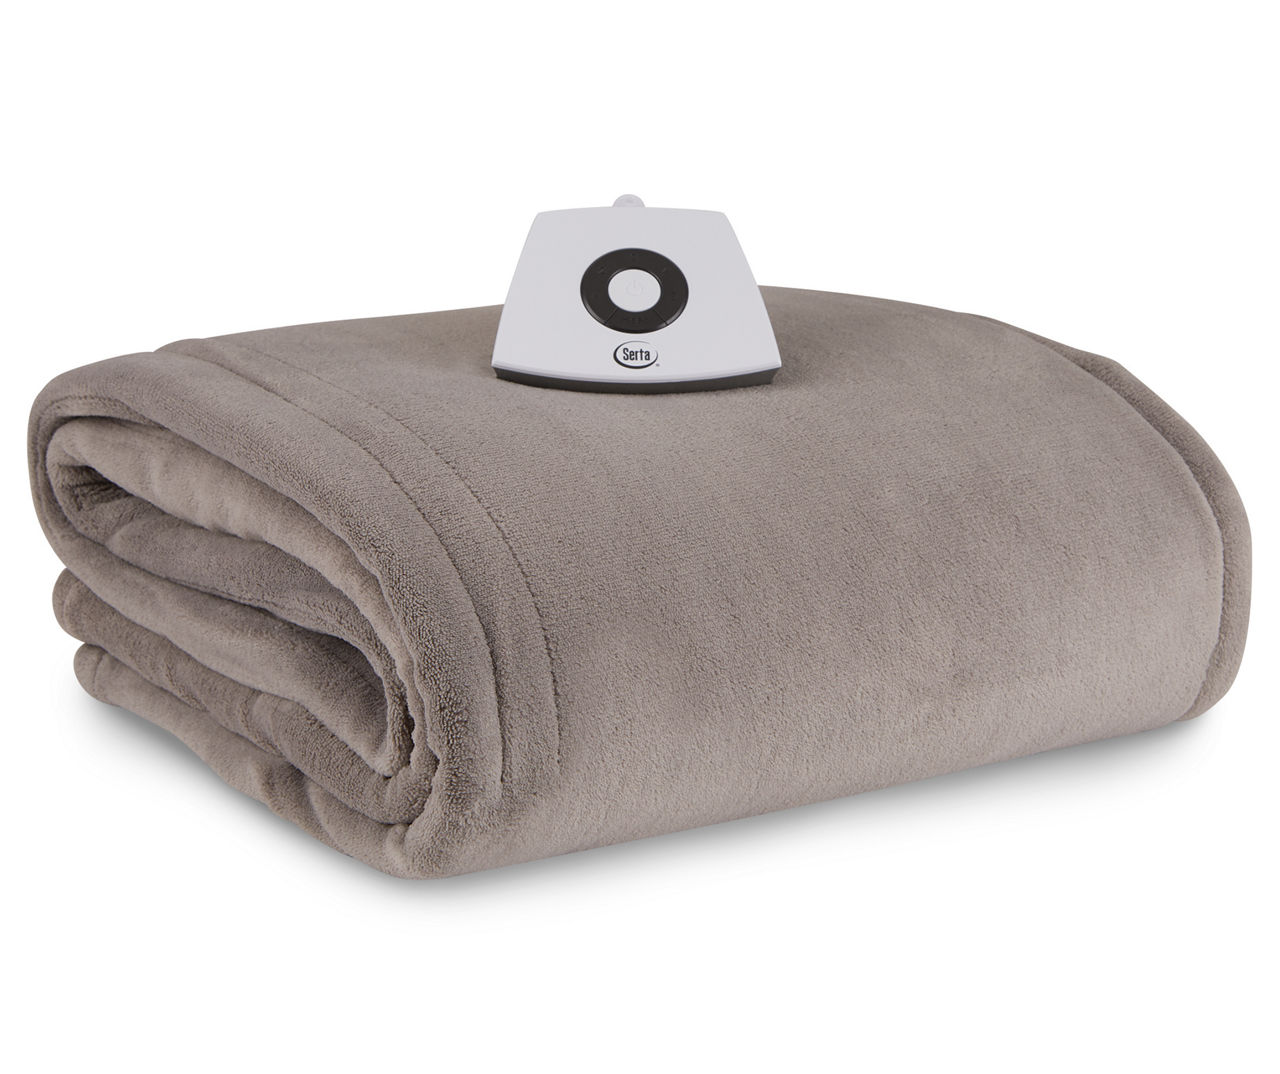 Serta Perfect Sleeper Bluetooth Wireless Heated Blanket Taupe Tan Size Queen 